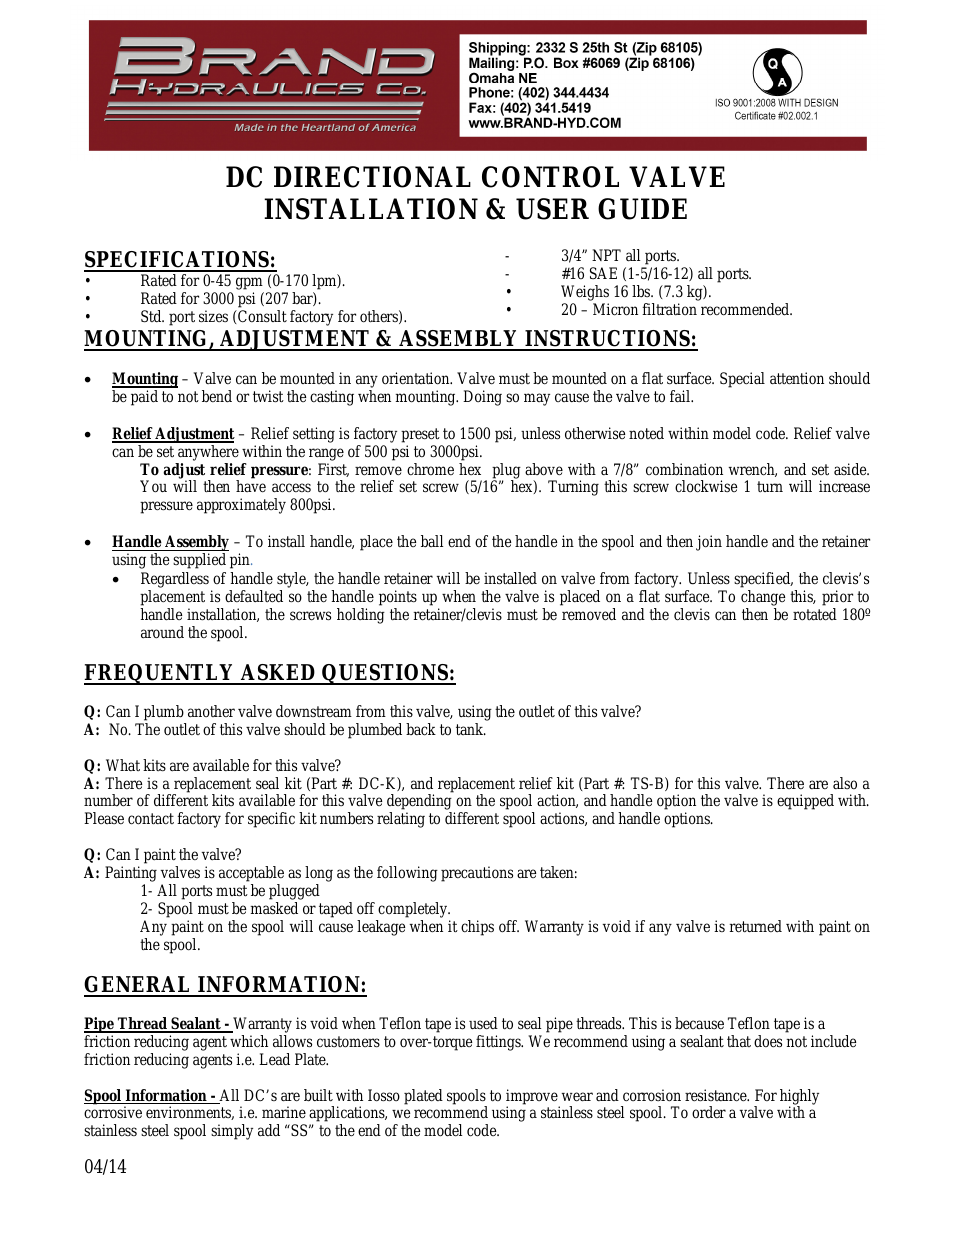 DC DIRECTIONAL CONTROL VALVE